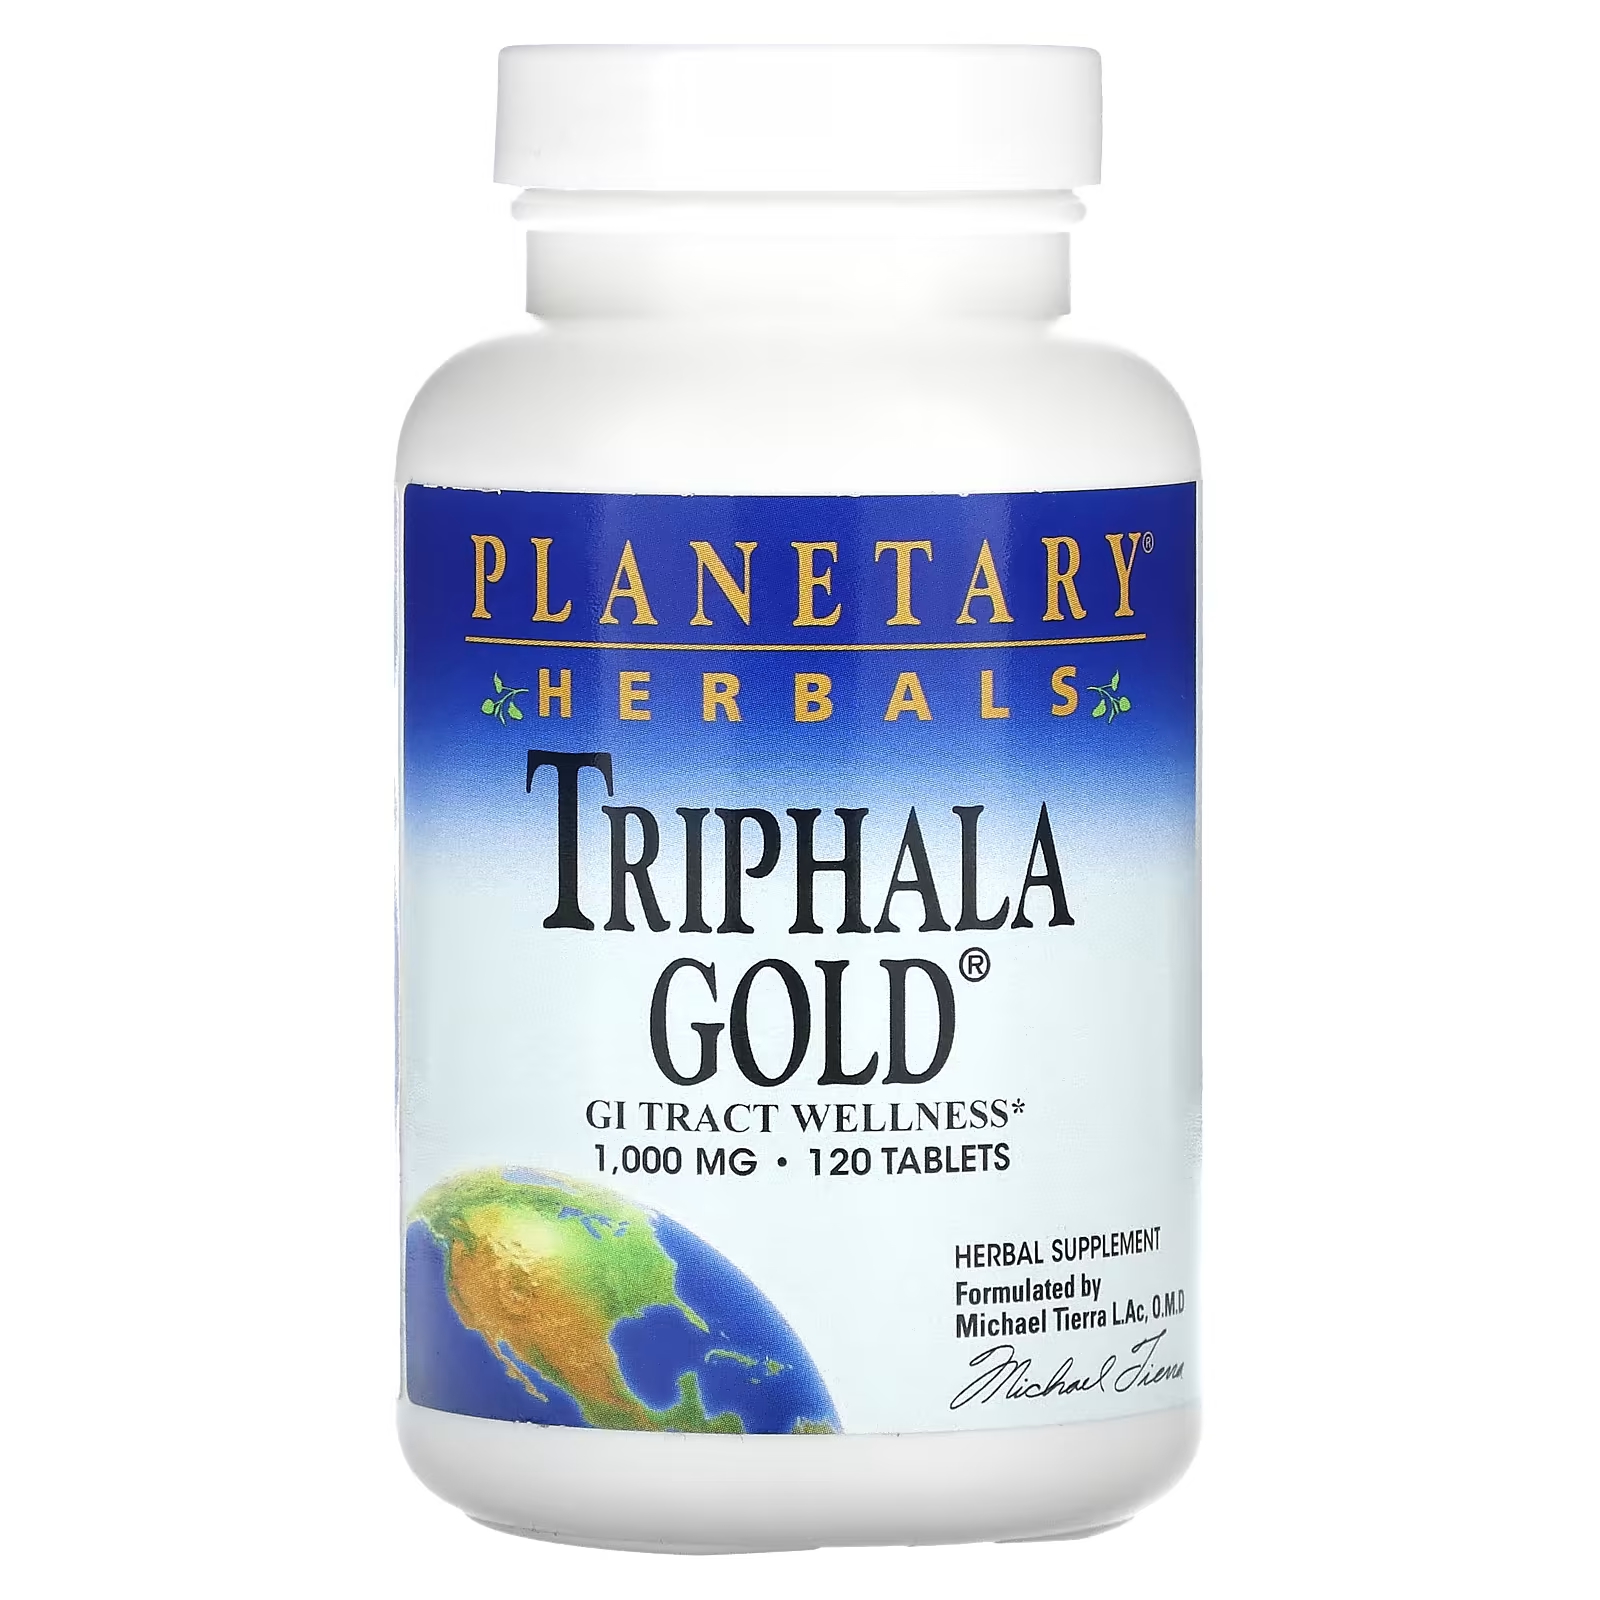 Planetary Herbals Трифала Голд 1000 мг 120 таблеток